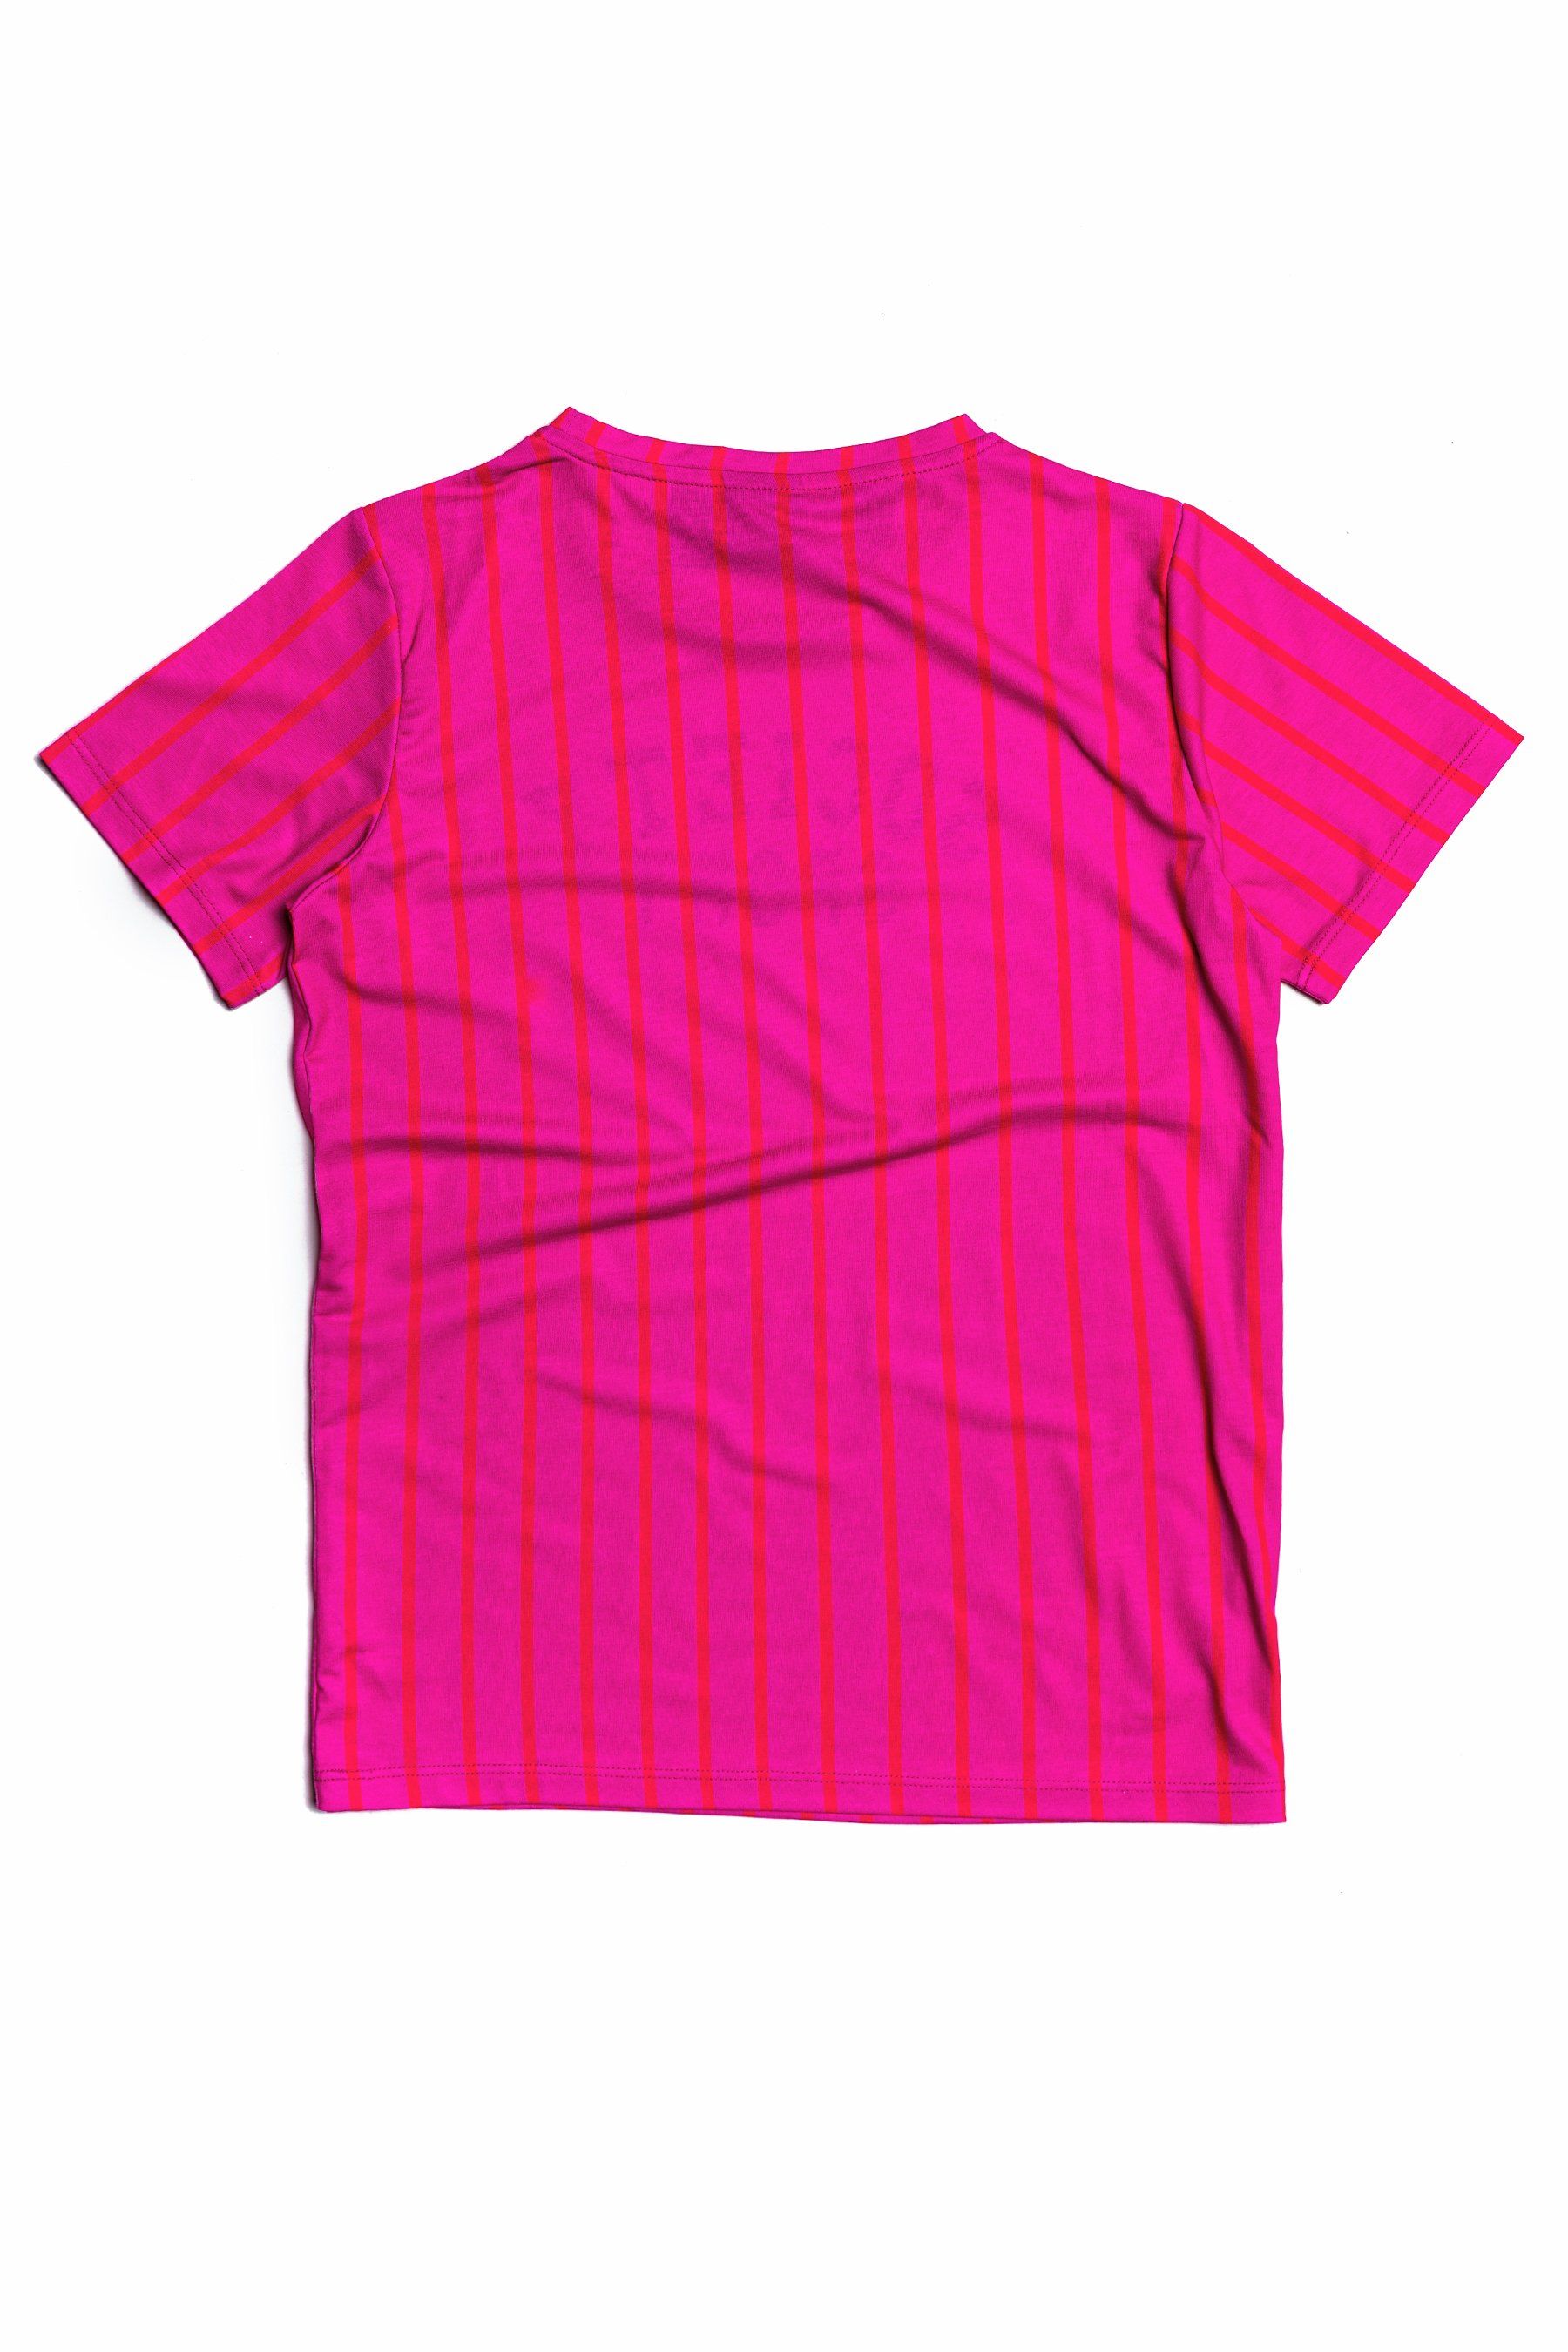 Society Sport Pink Stripe T-Shirt